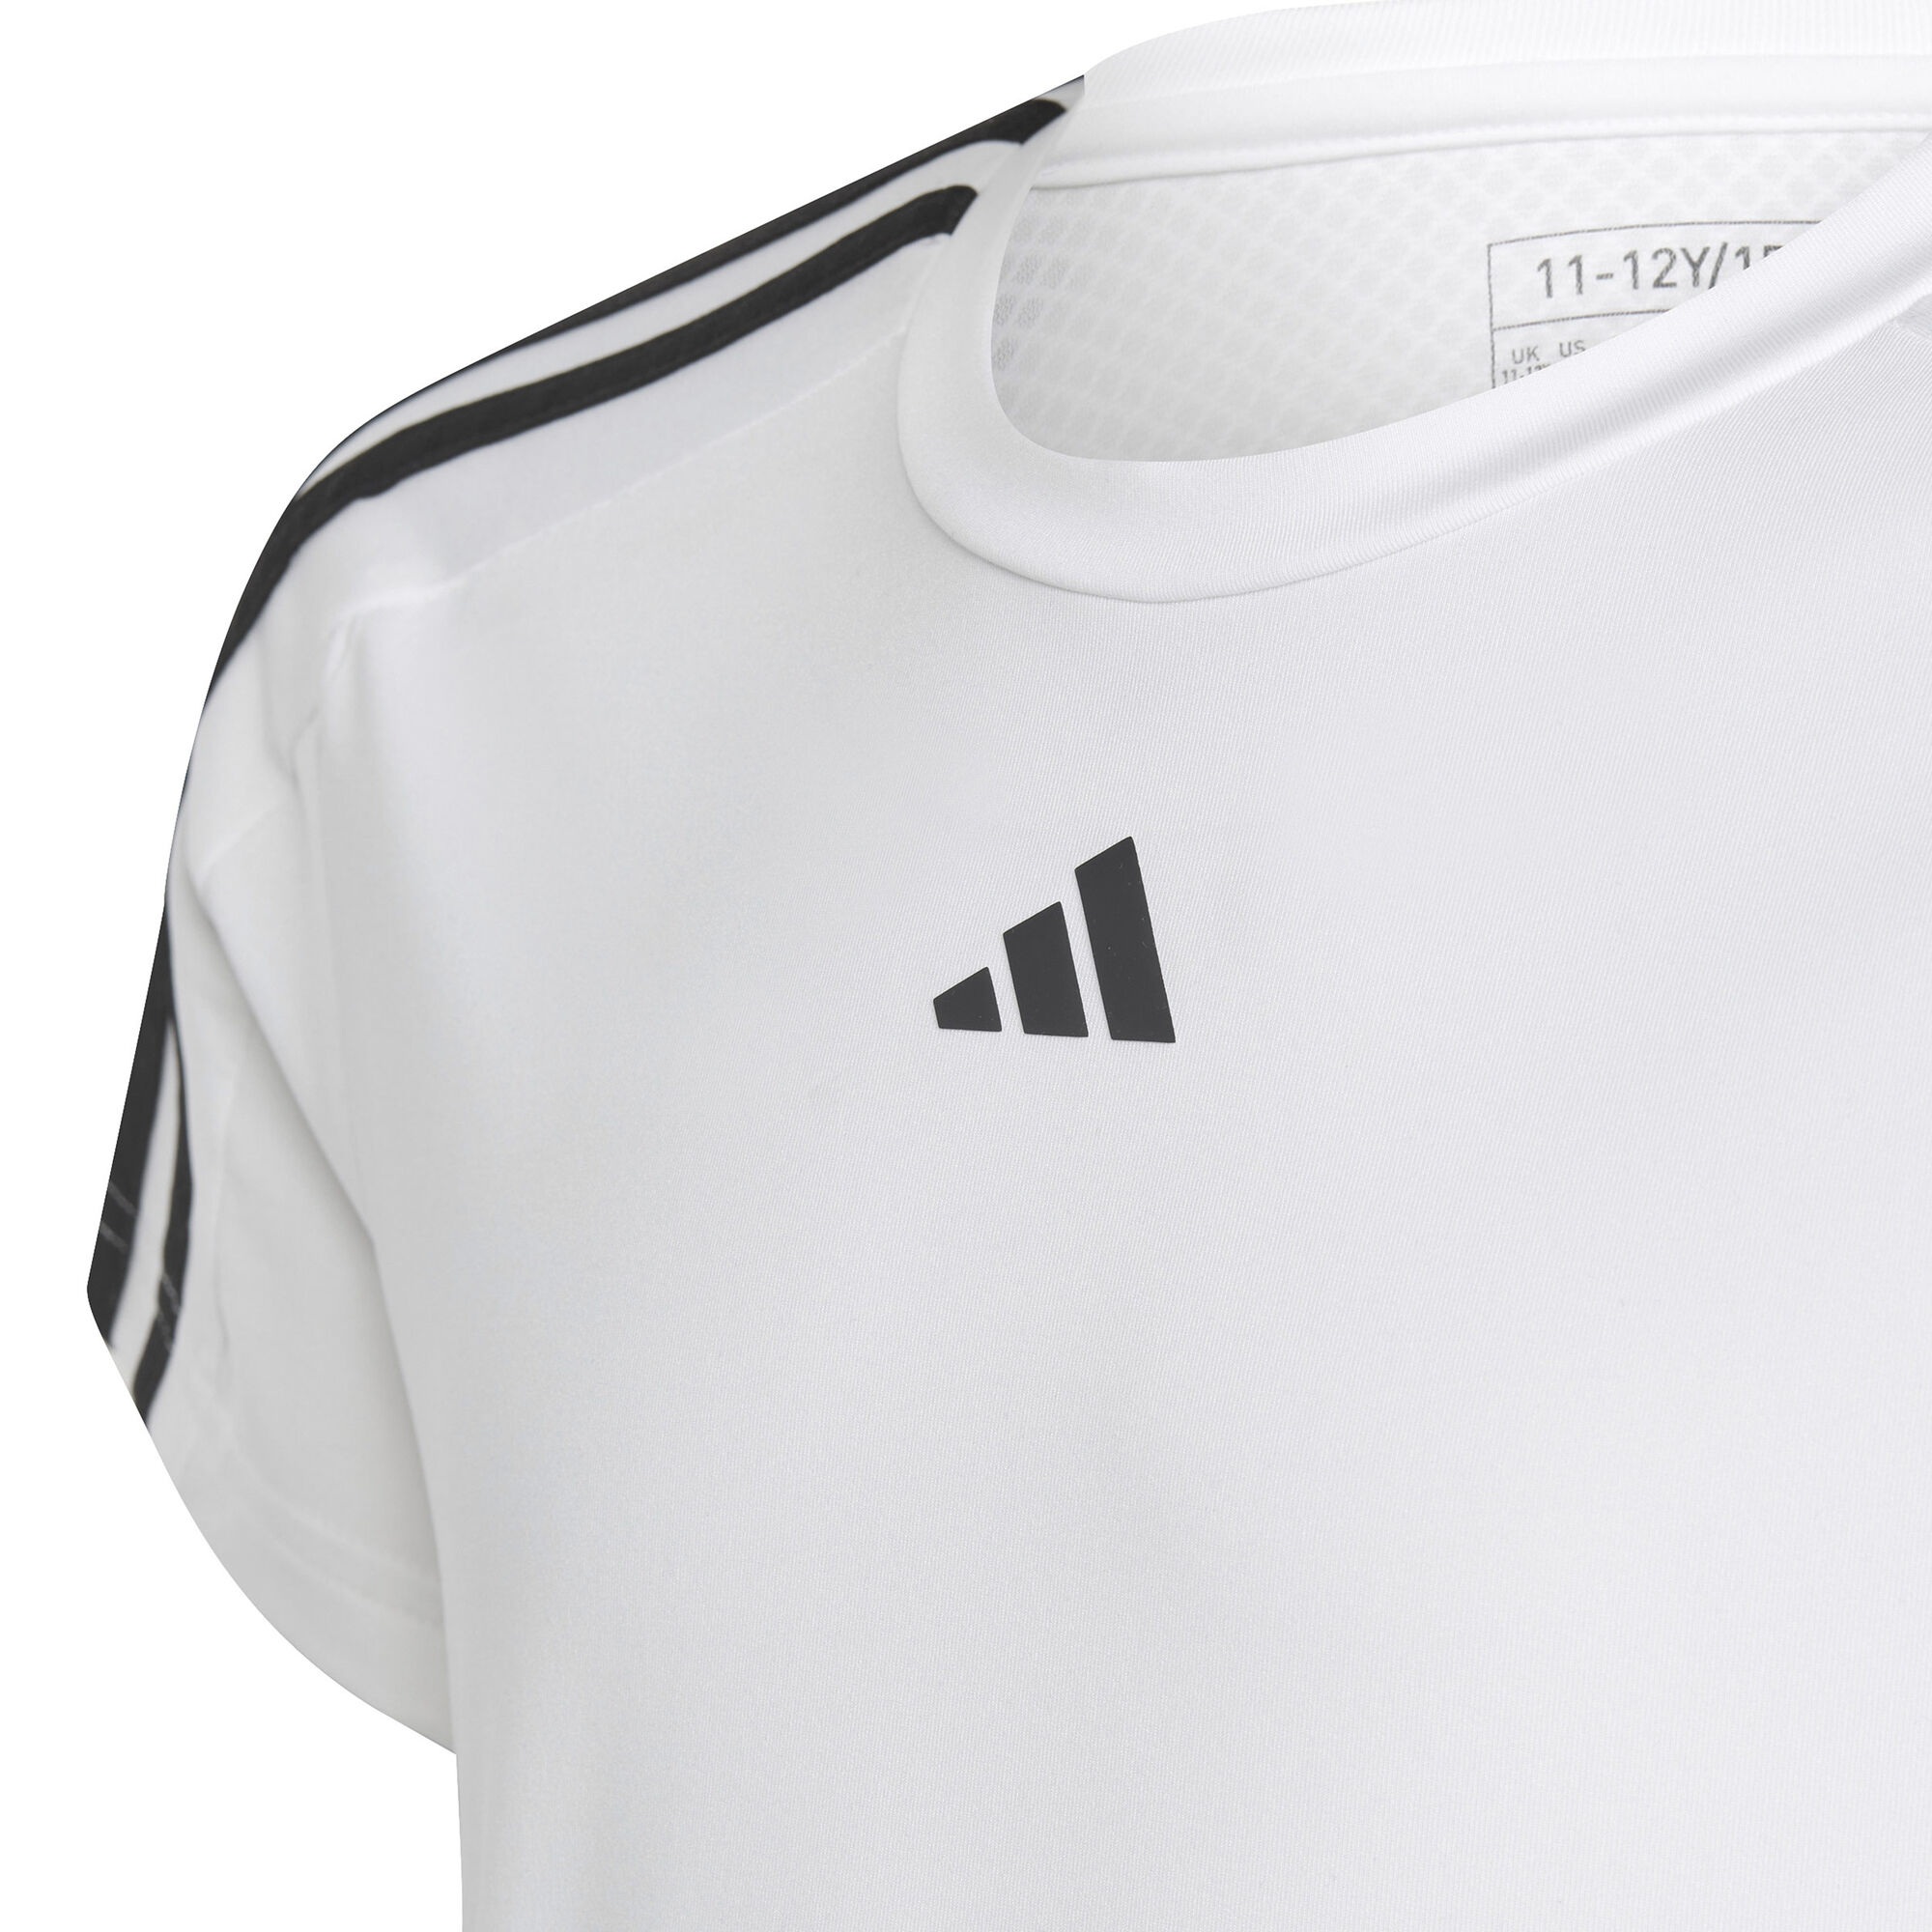 Buy T-Shirt Tennis 3-Stripes online adidas COM | White, Black Girls Point